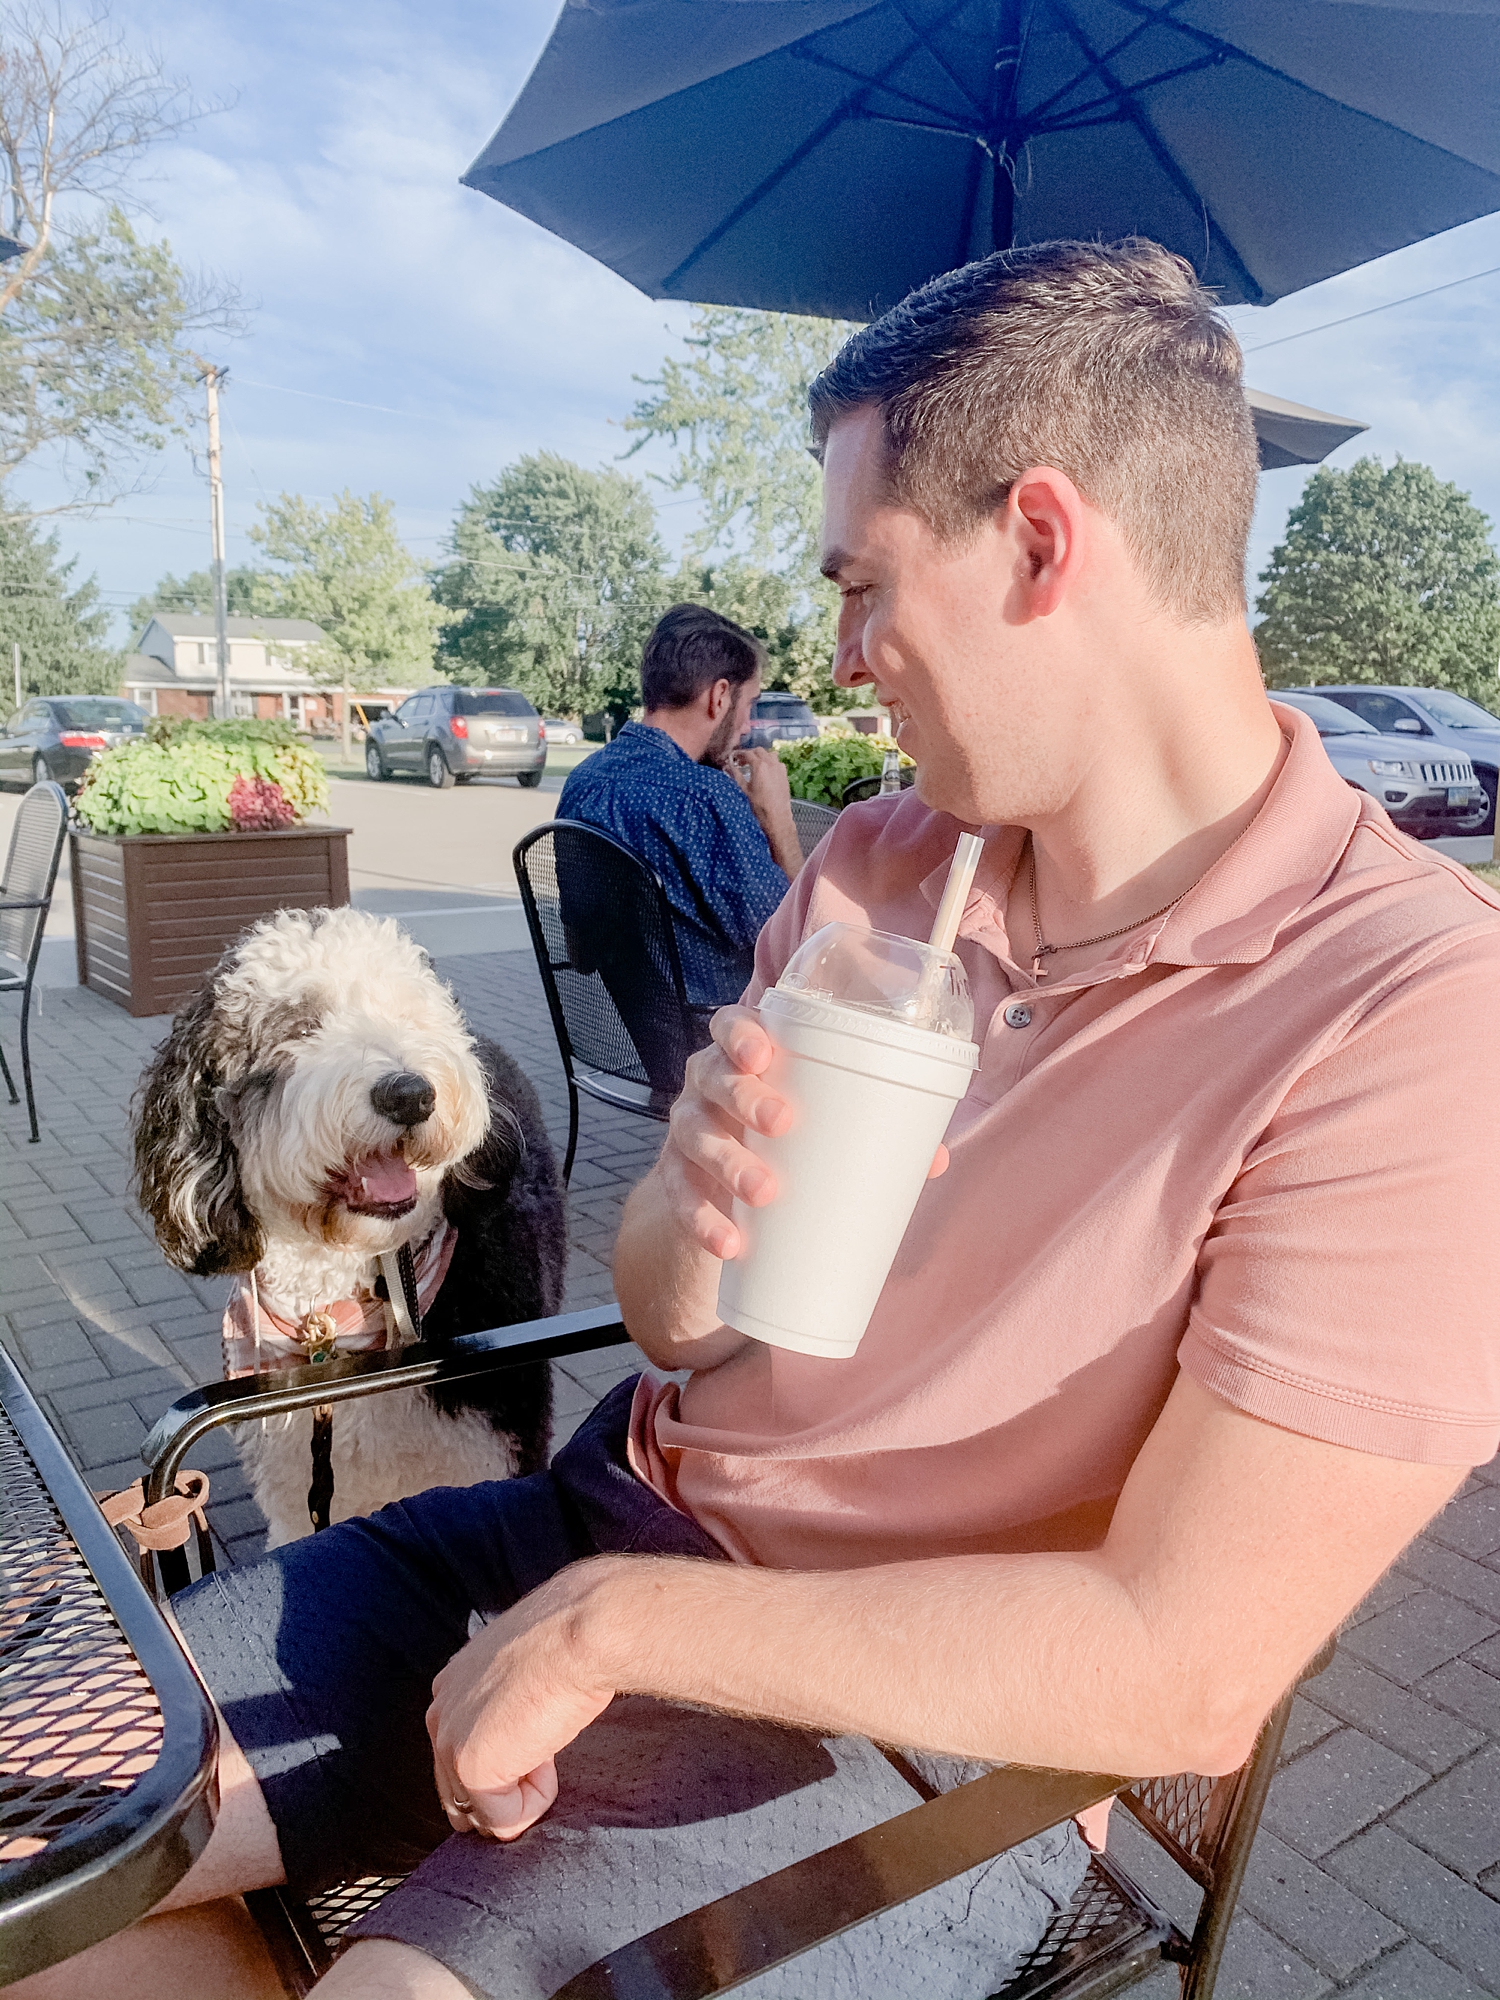 husband poses with dog at Ohio restaurant